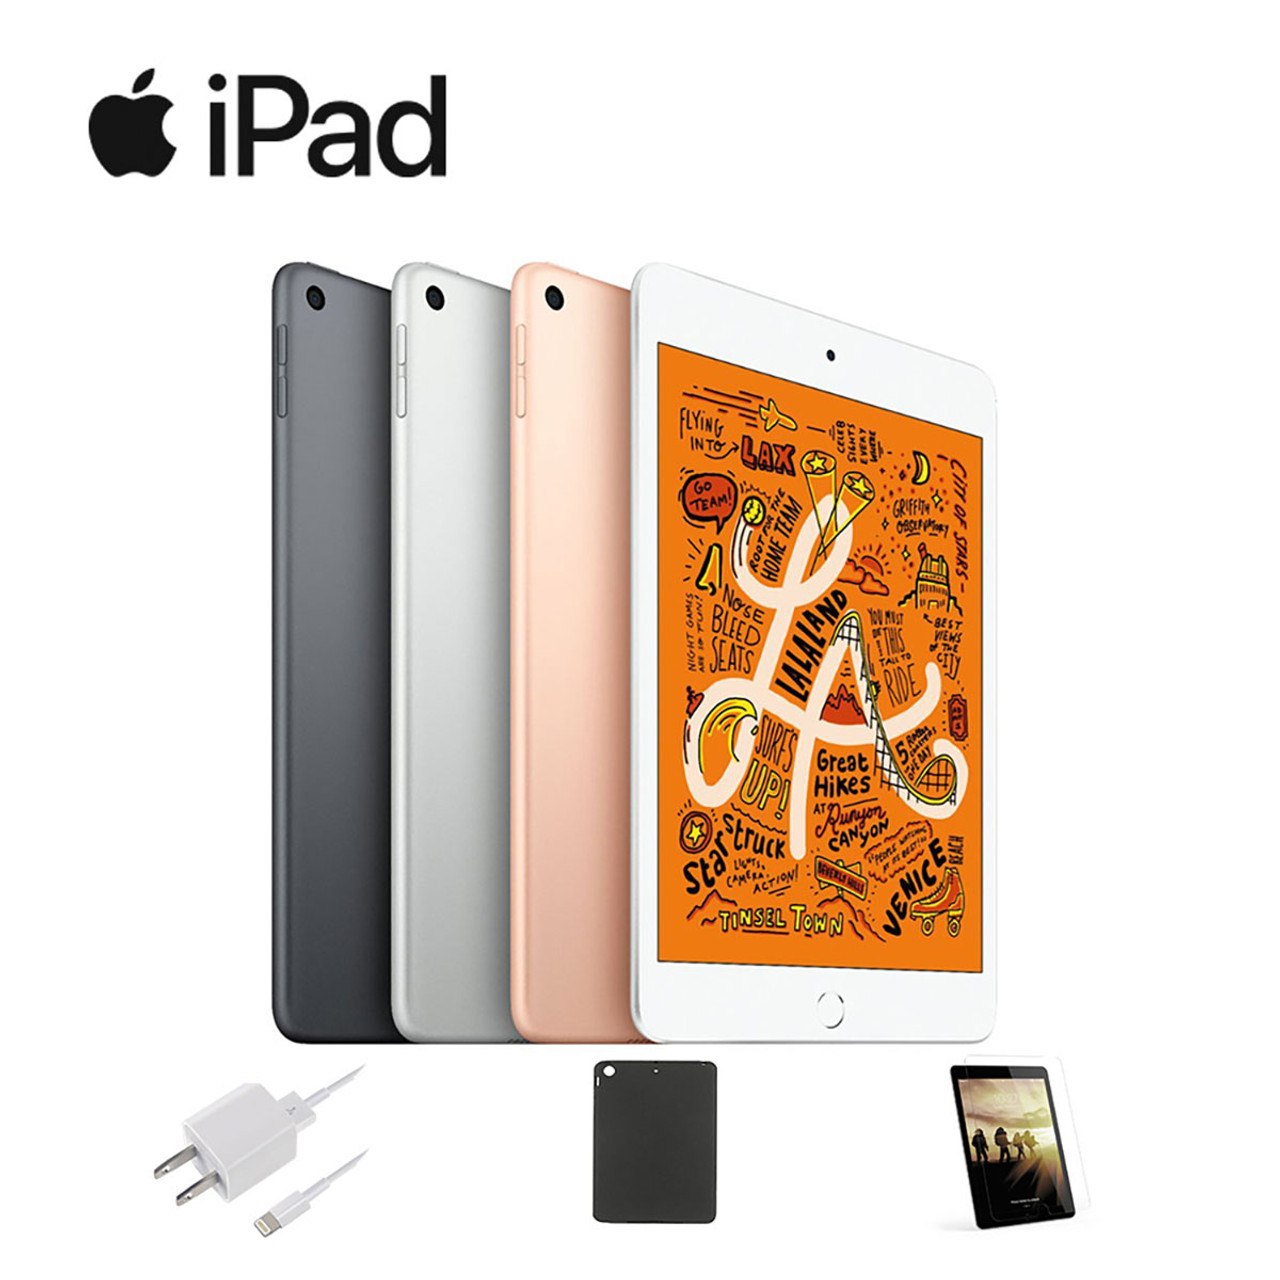 iPad Mini 5th Gen 256GB, WiFi + Cellular Bundle - Pick Your Plum